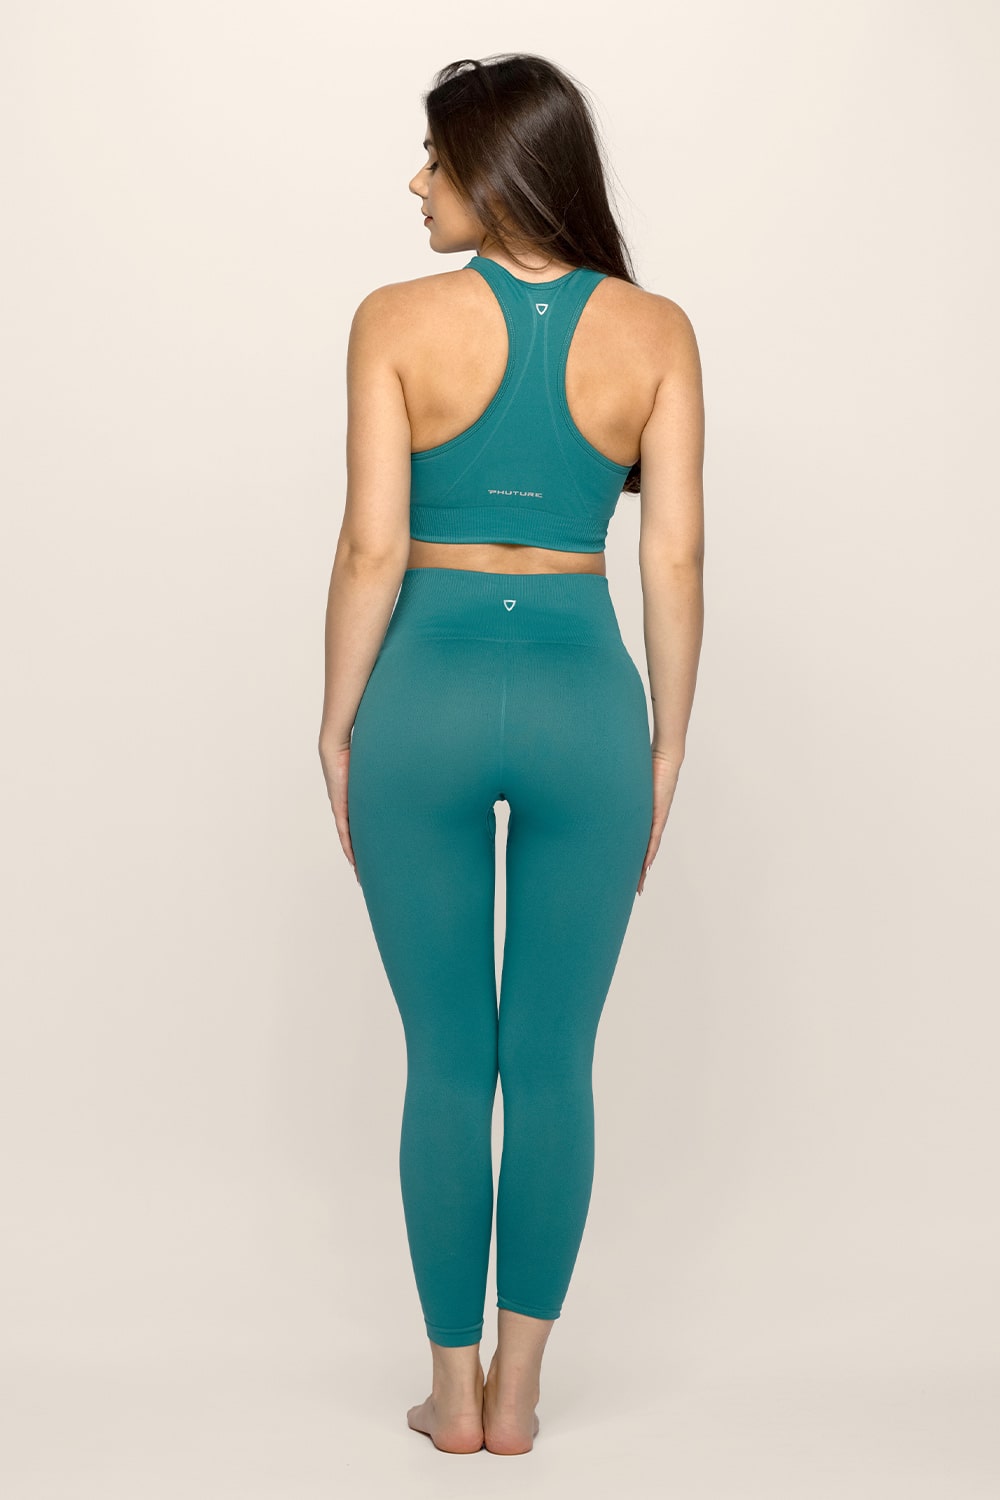 Amara Sports Bra - Turquoise